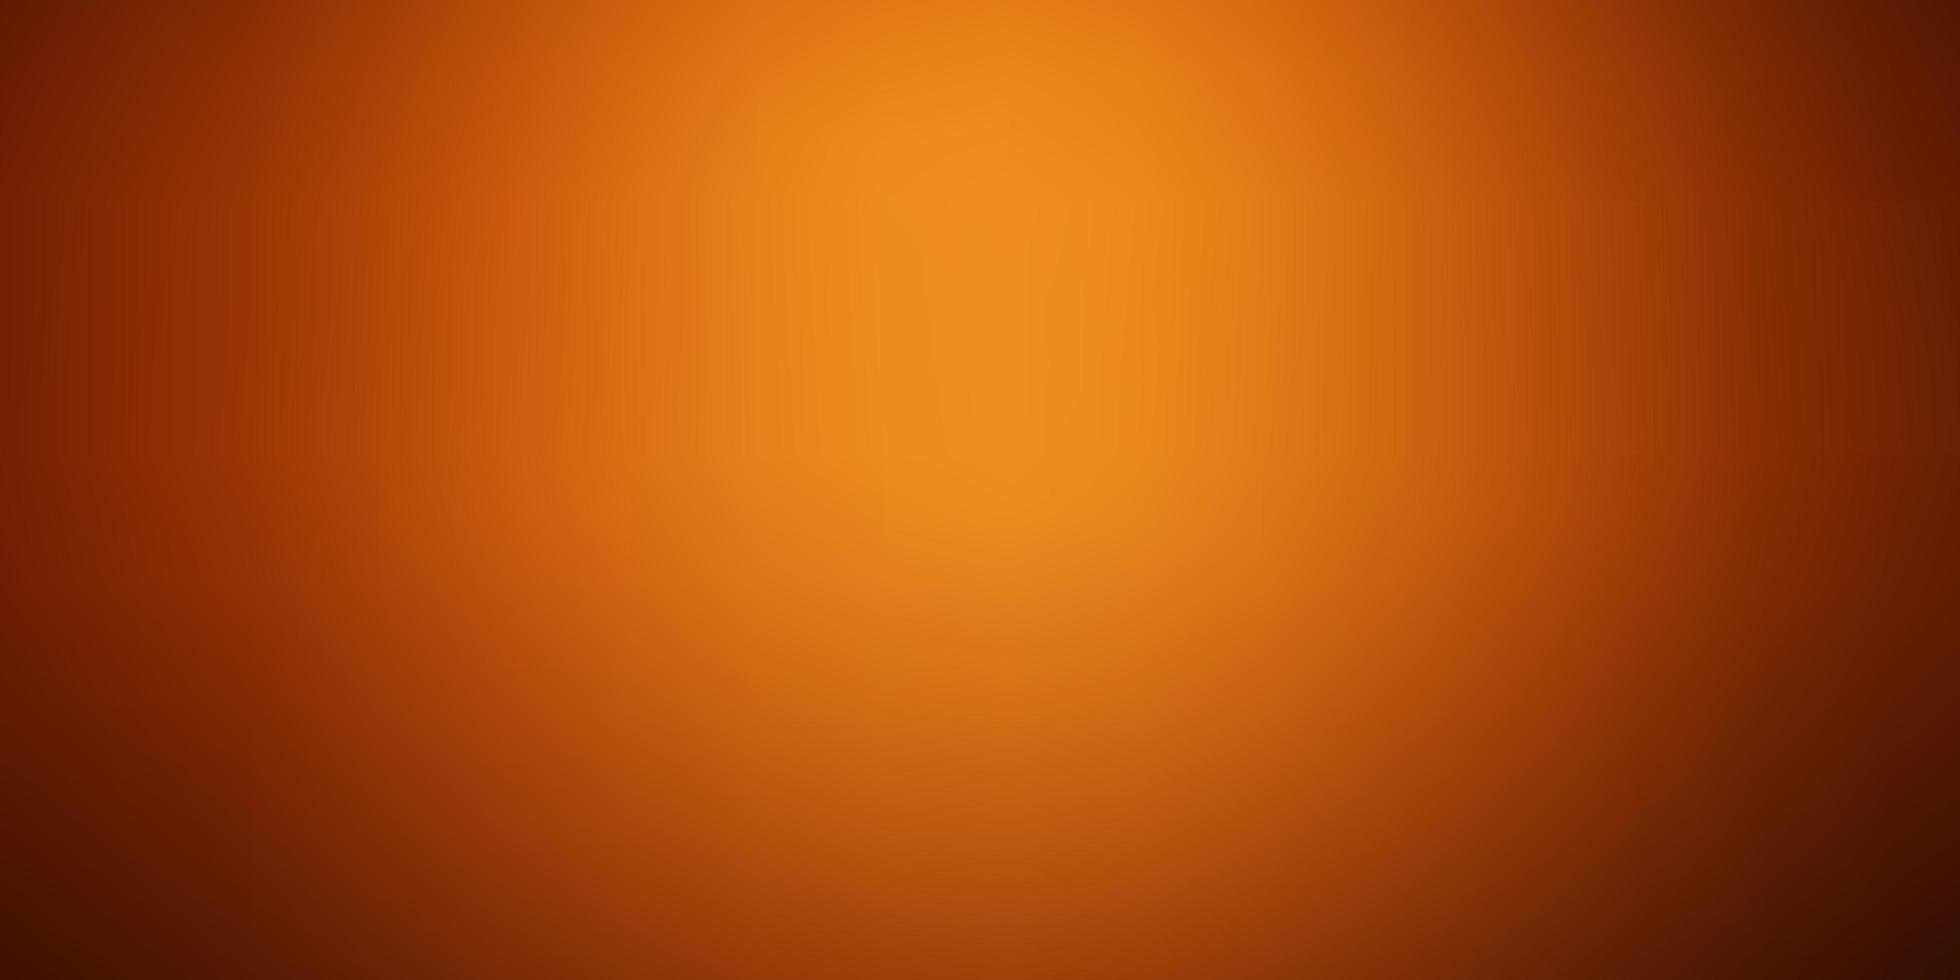 Dark Orange vector blurred template